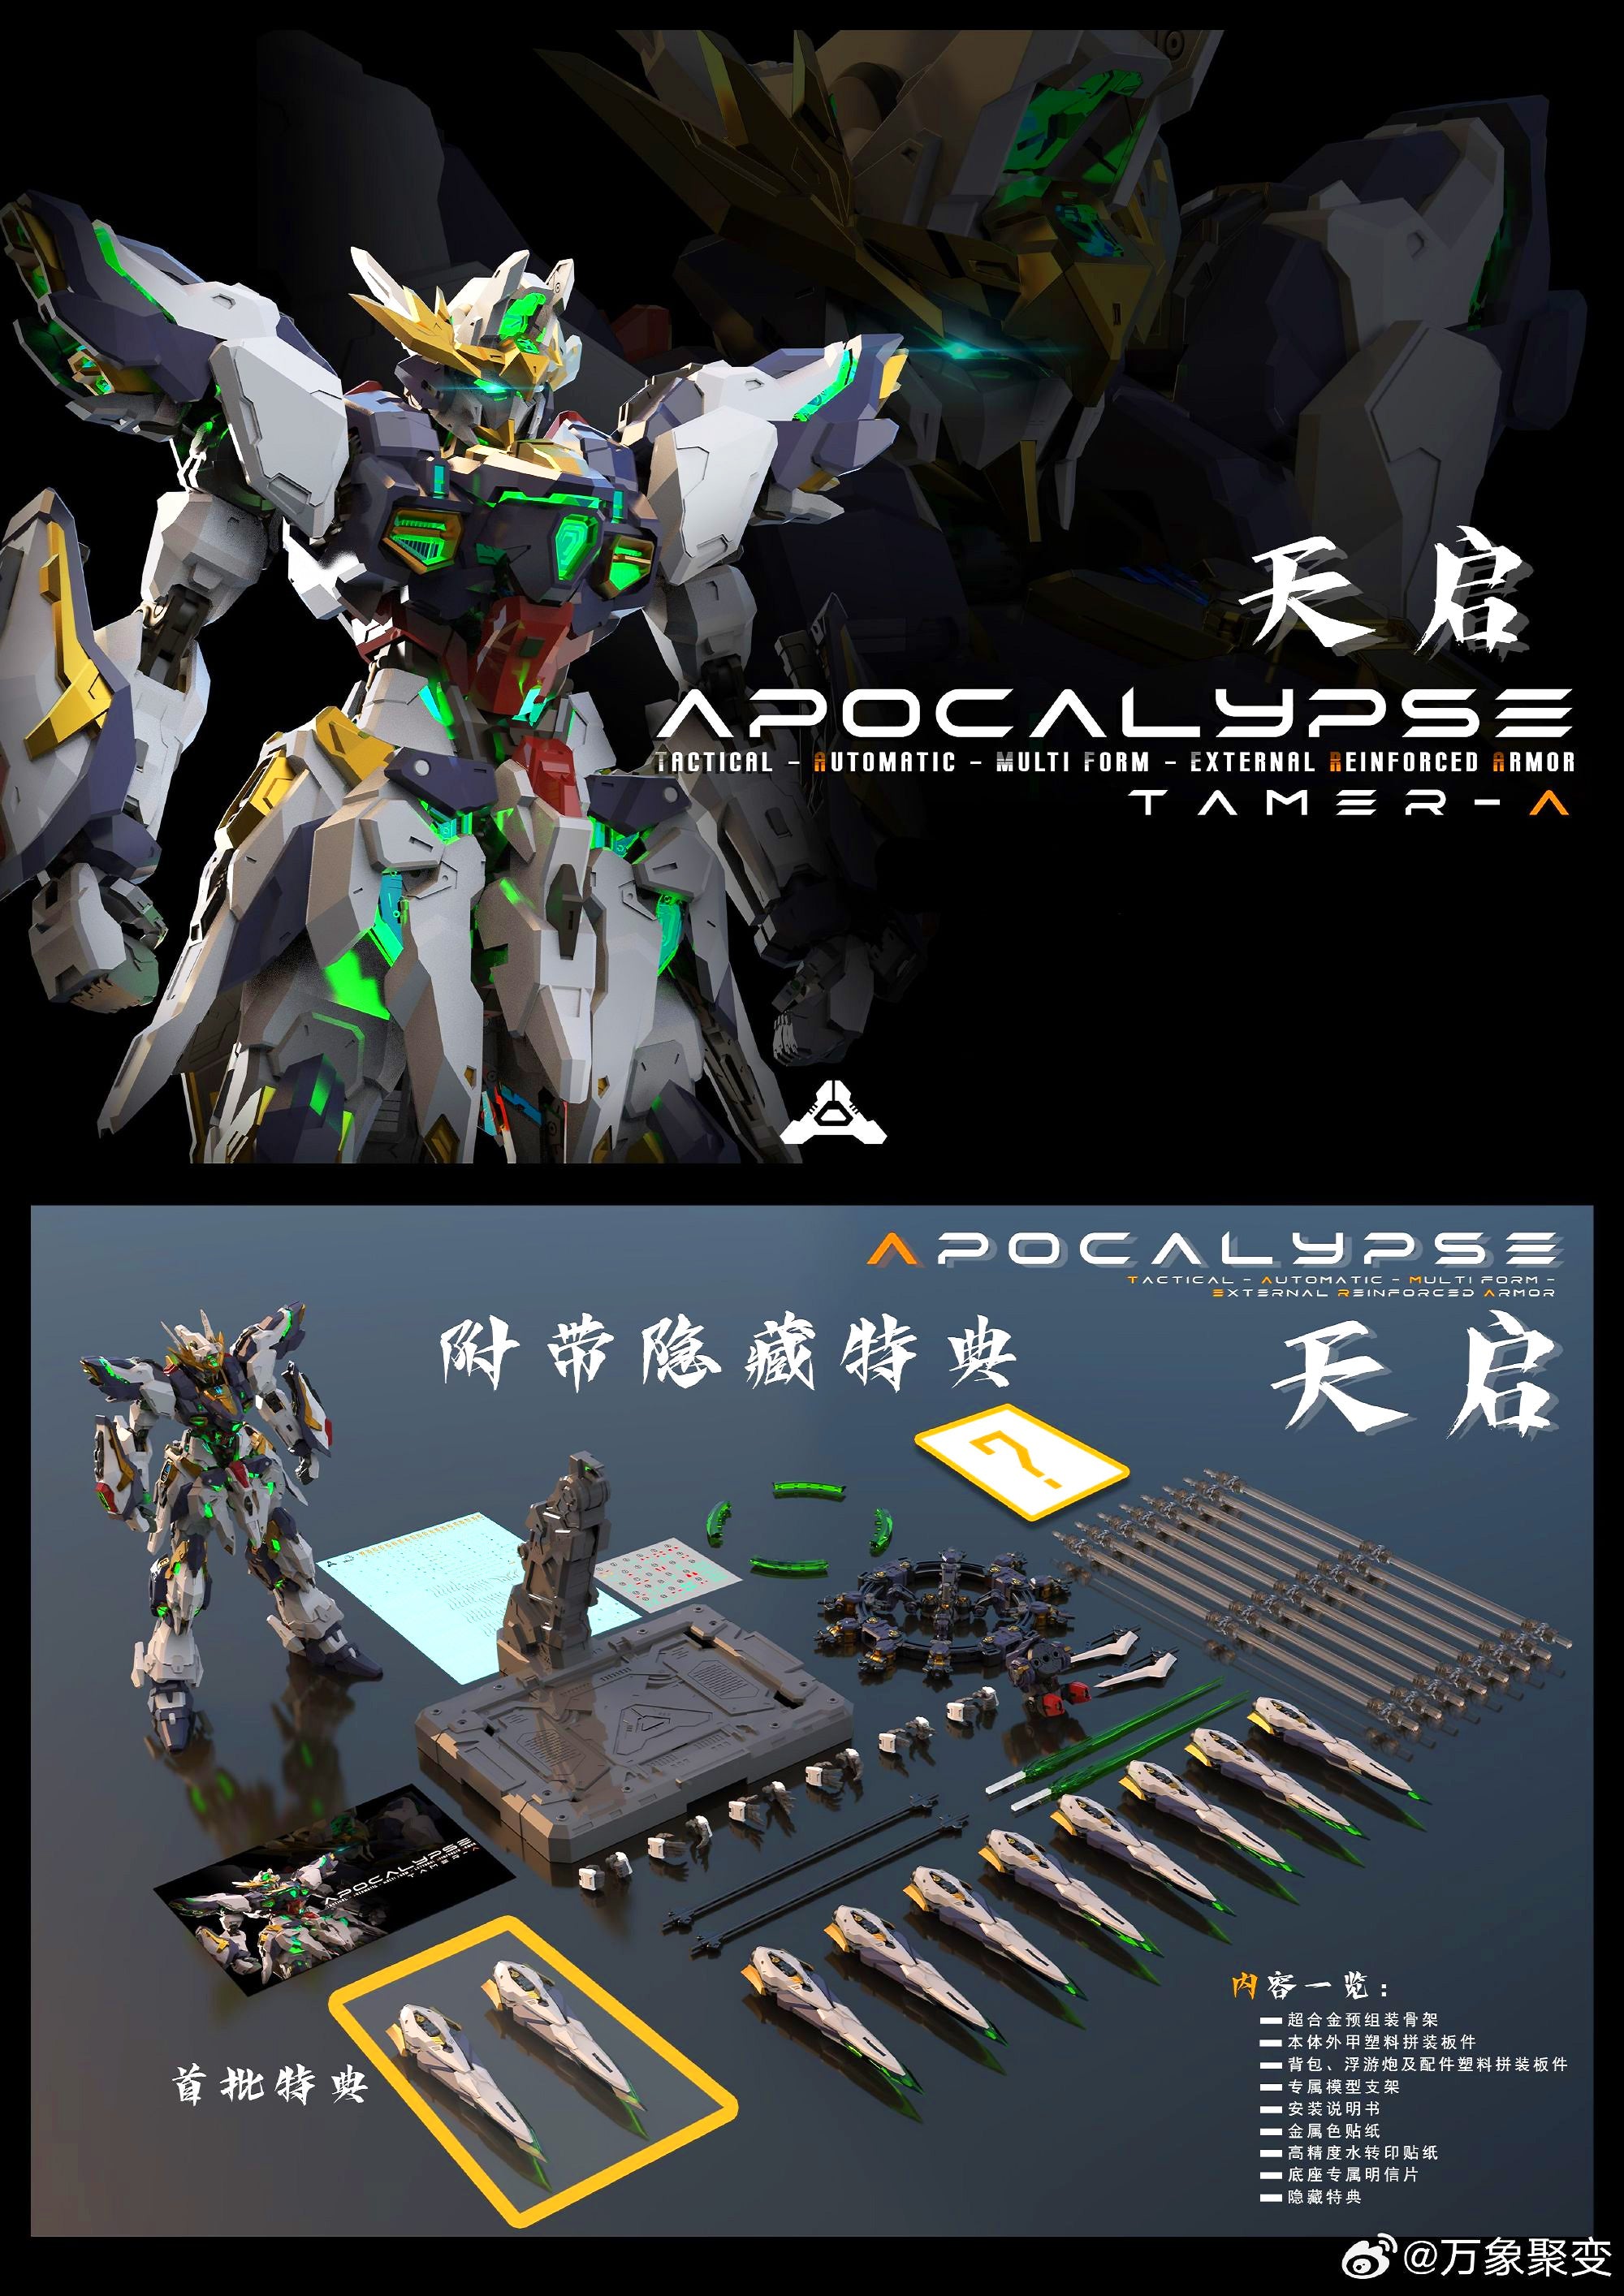 Vientiane Fusion Apocalypse Metal Build Structure Model Action Figure Kit VCA Gundam Singapore